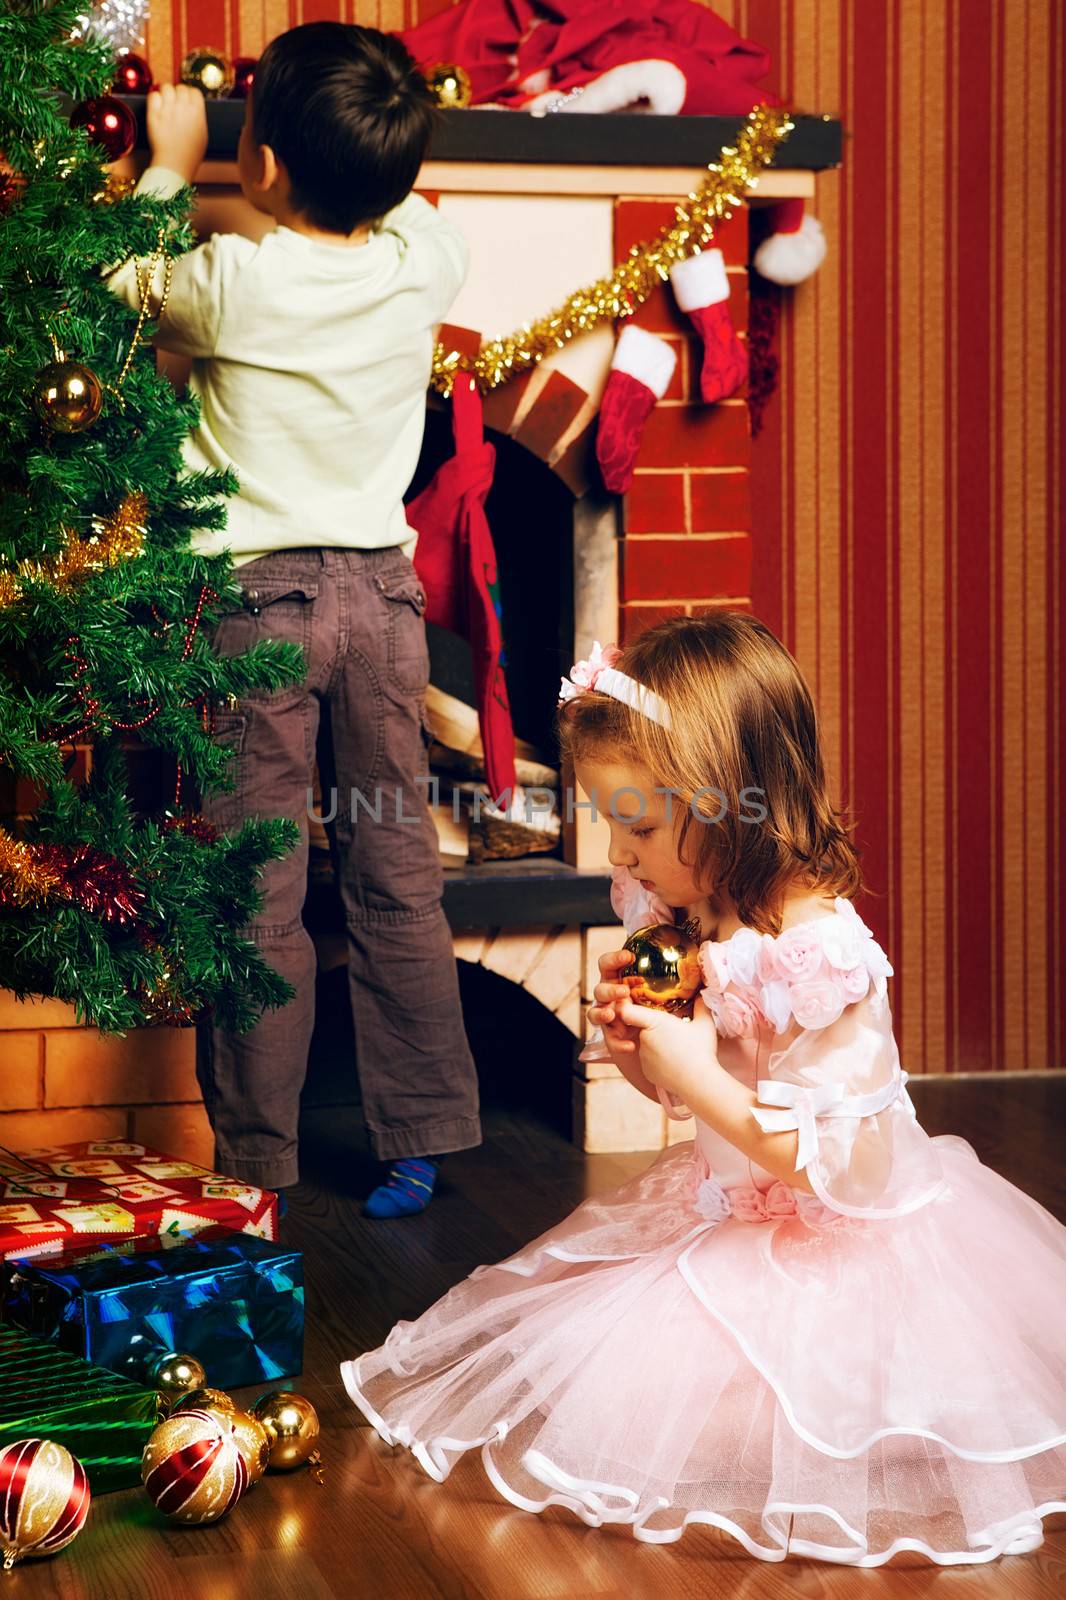 beautiful boy and girl decorate christmas tree